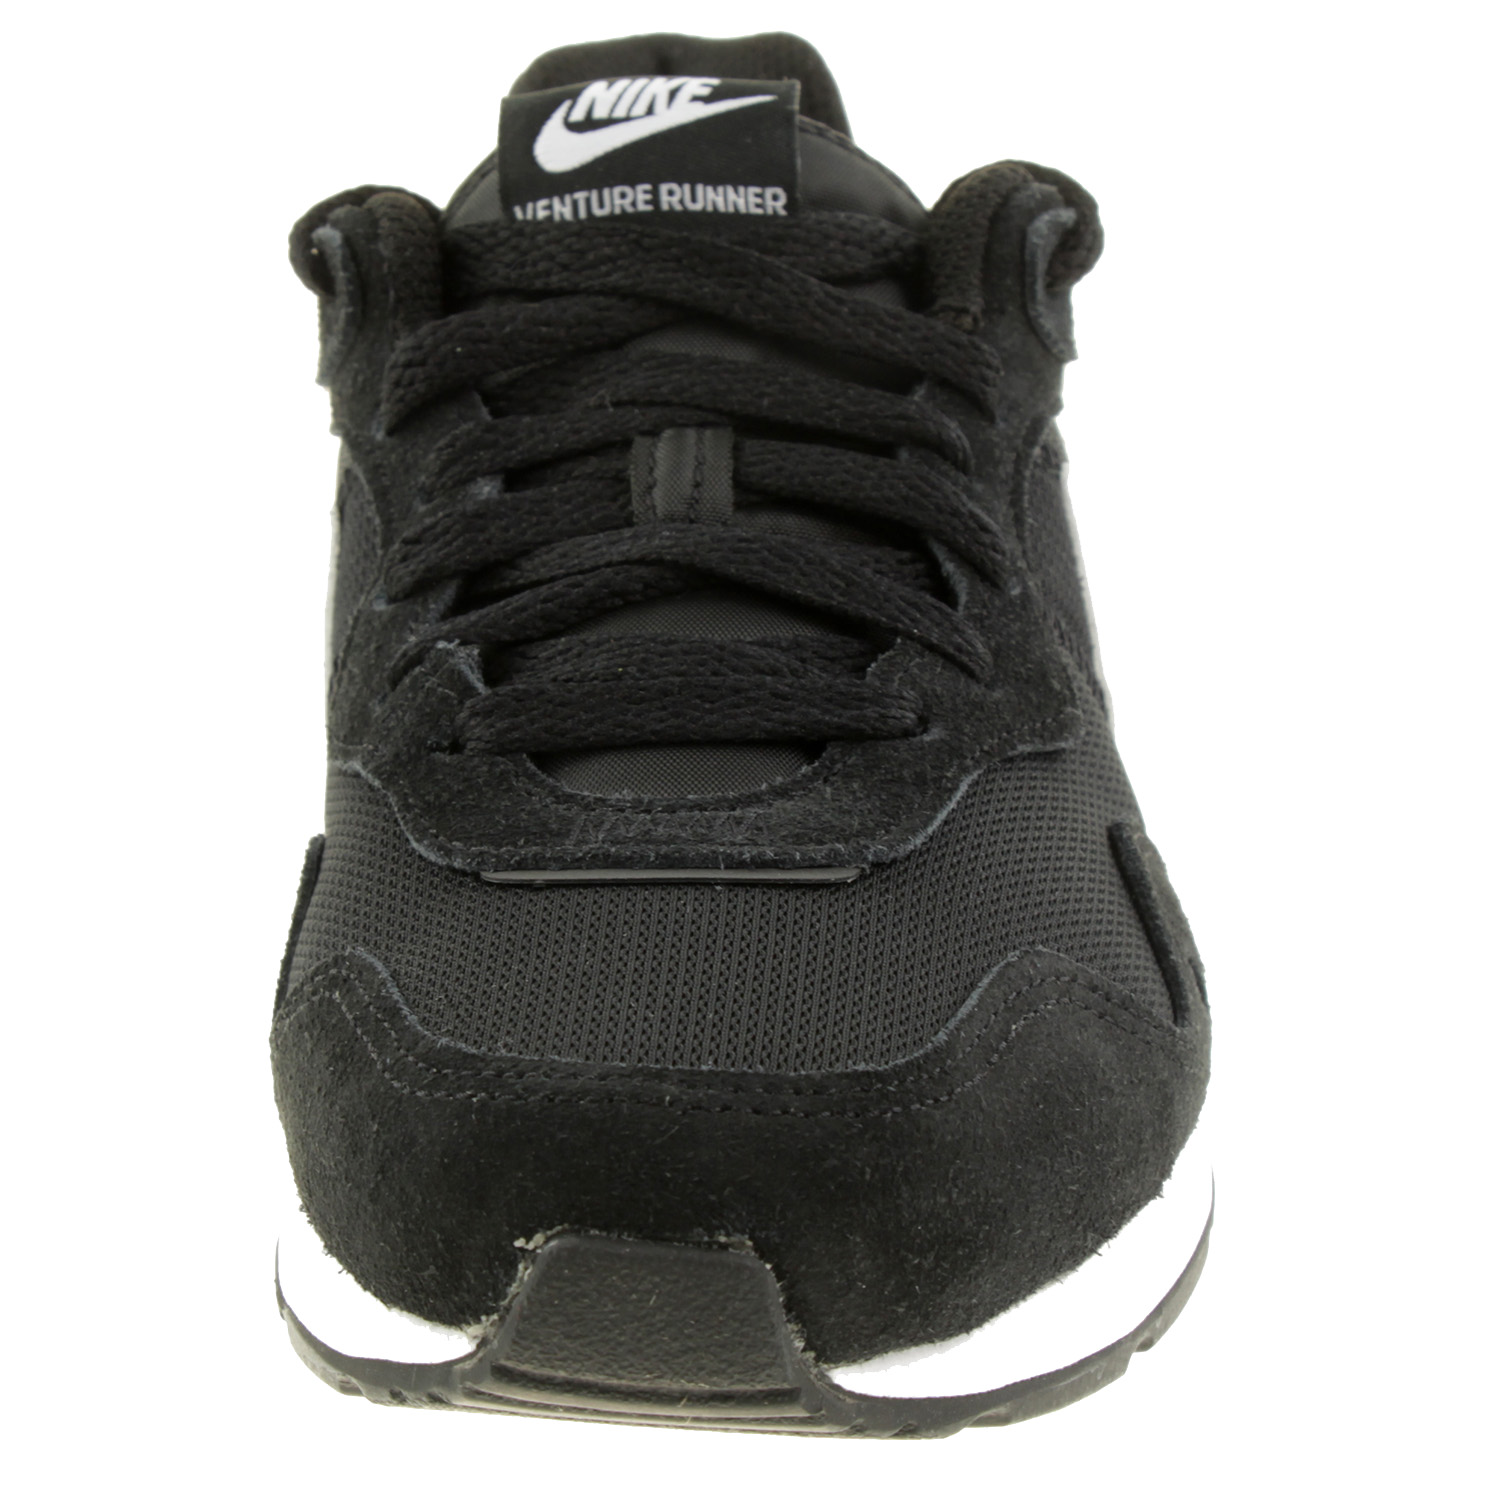 Nike Venture Runner Laufschuhe Herren MEN Sneaker Sportschuhe Run CK2944 002 schwarz